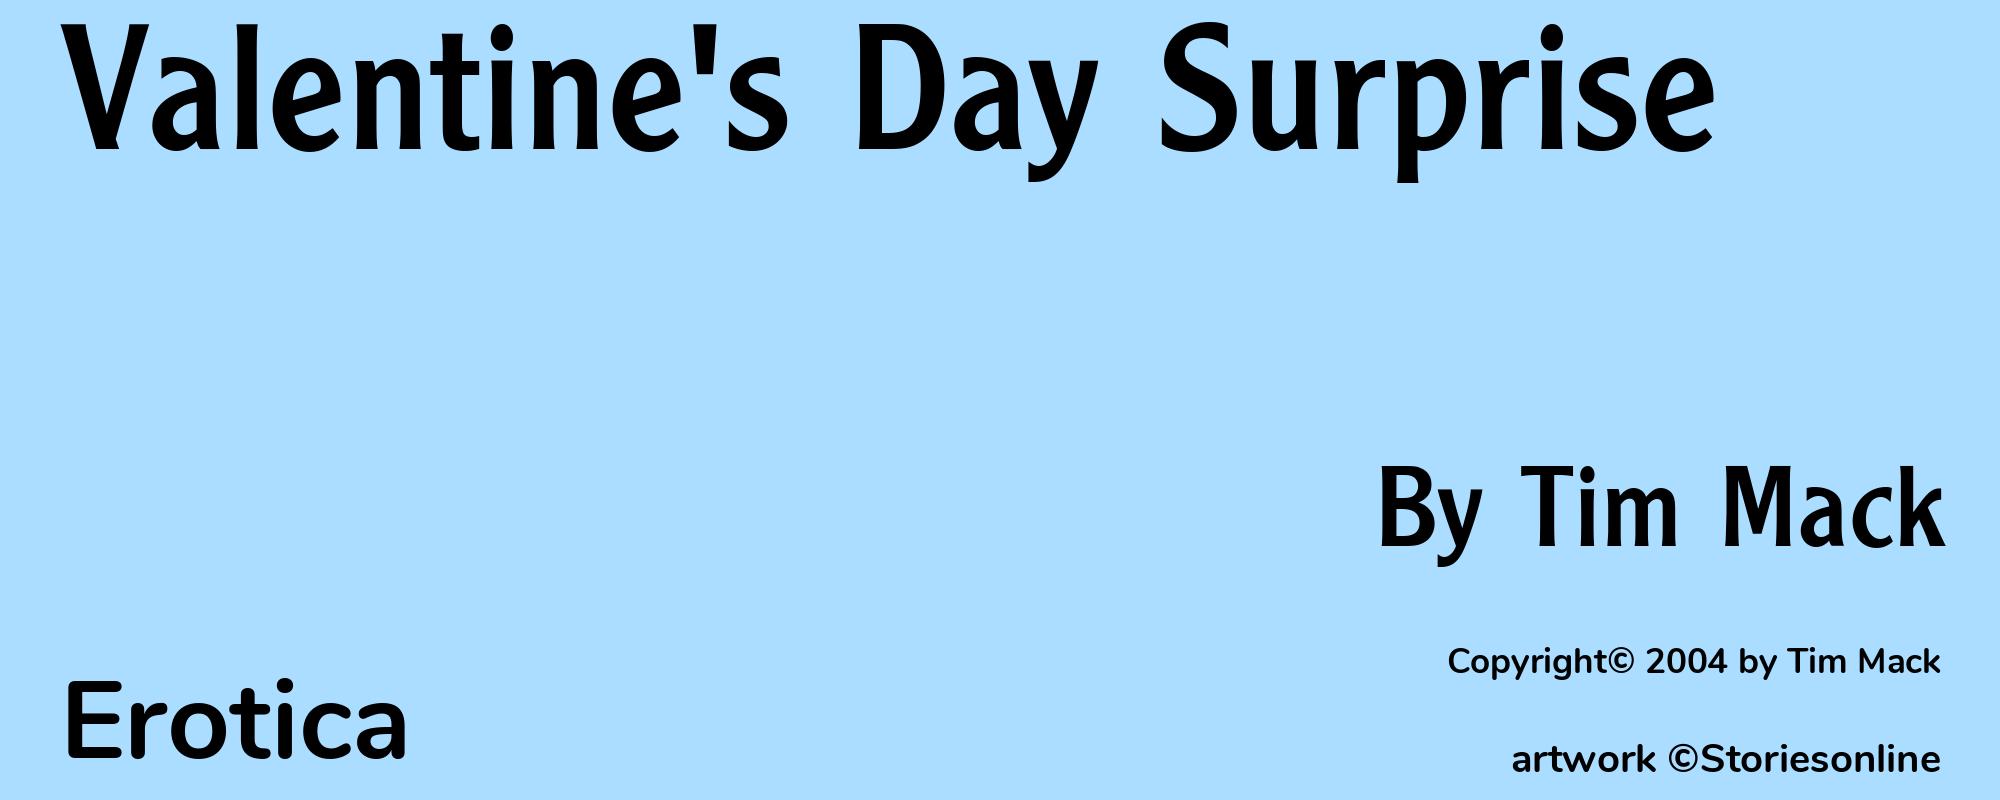 Valentine's Day Surprise - Cover